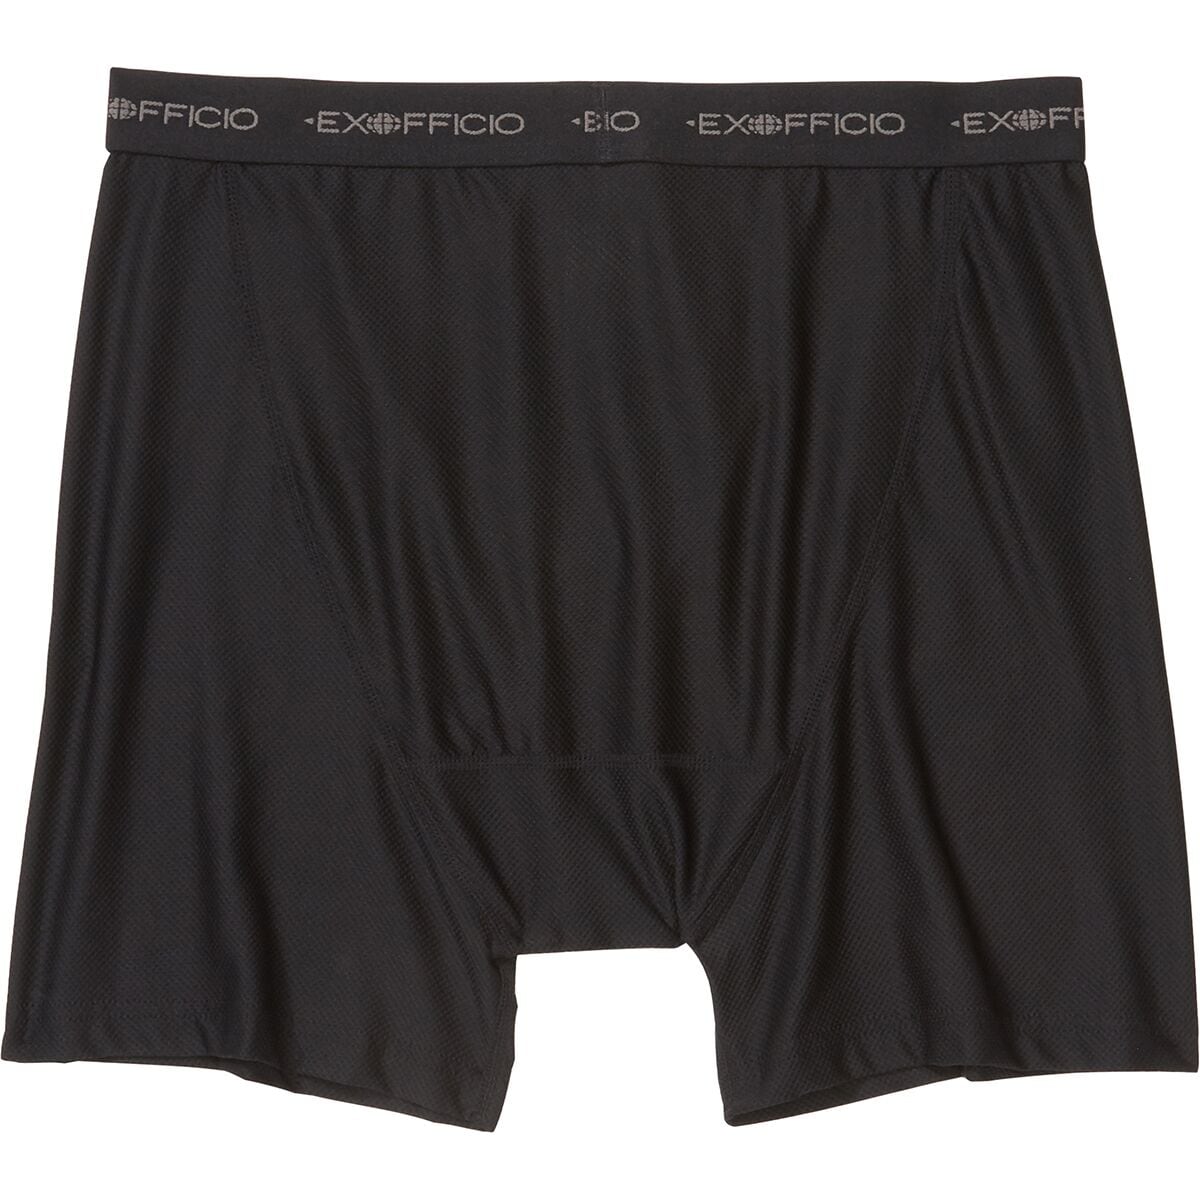 ExOfficio Men's Give-N-Go Sport Mesh 9'' Boxer Brief, Black/Royal, Large at   Men's Clothing store